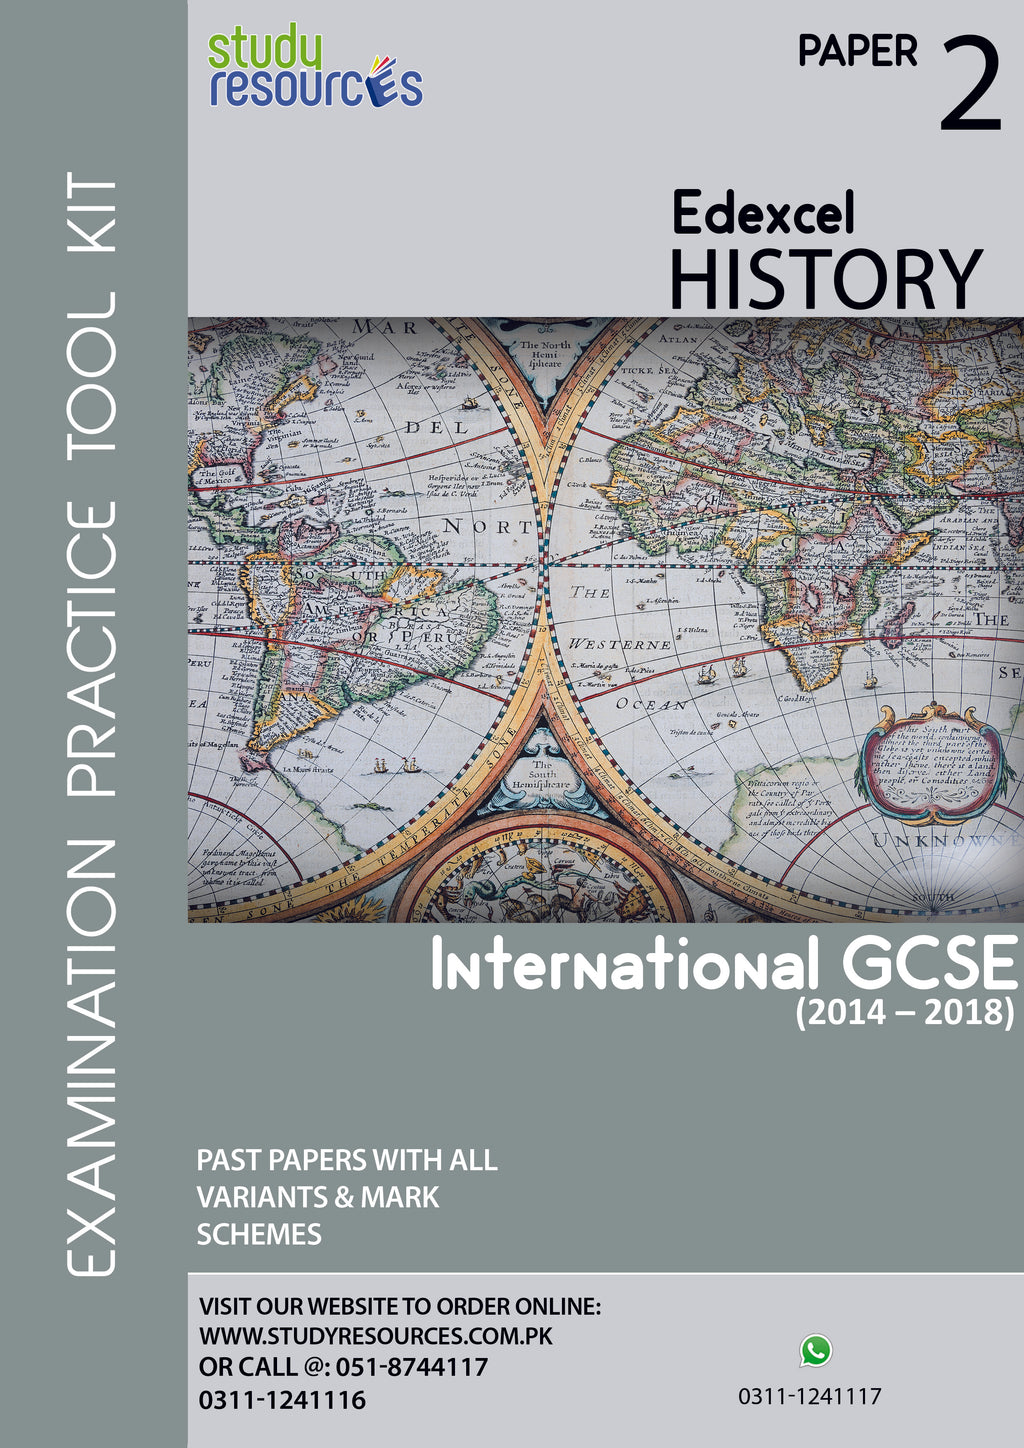 Edexcel IGCSE History P-2 Past Papers (2014-2018)